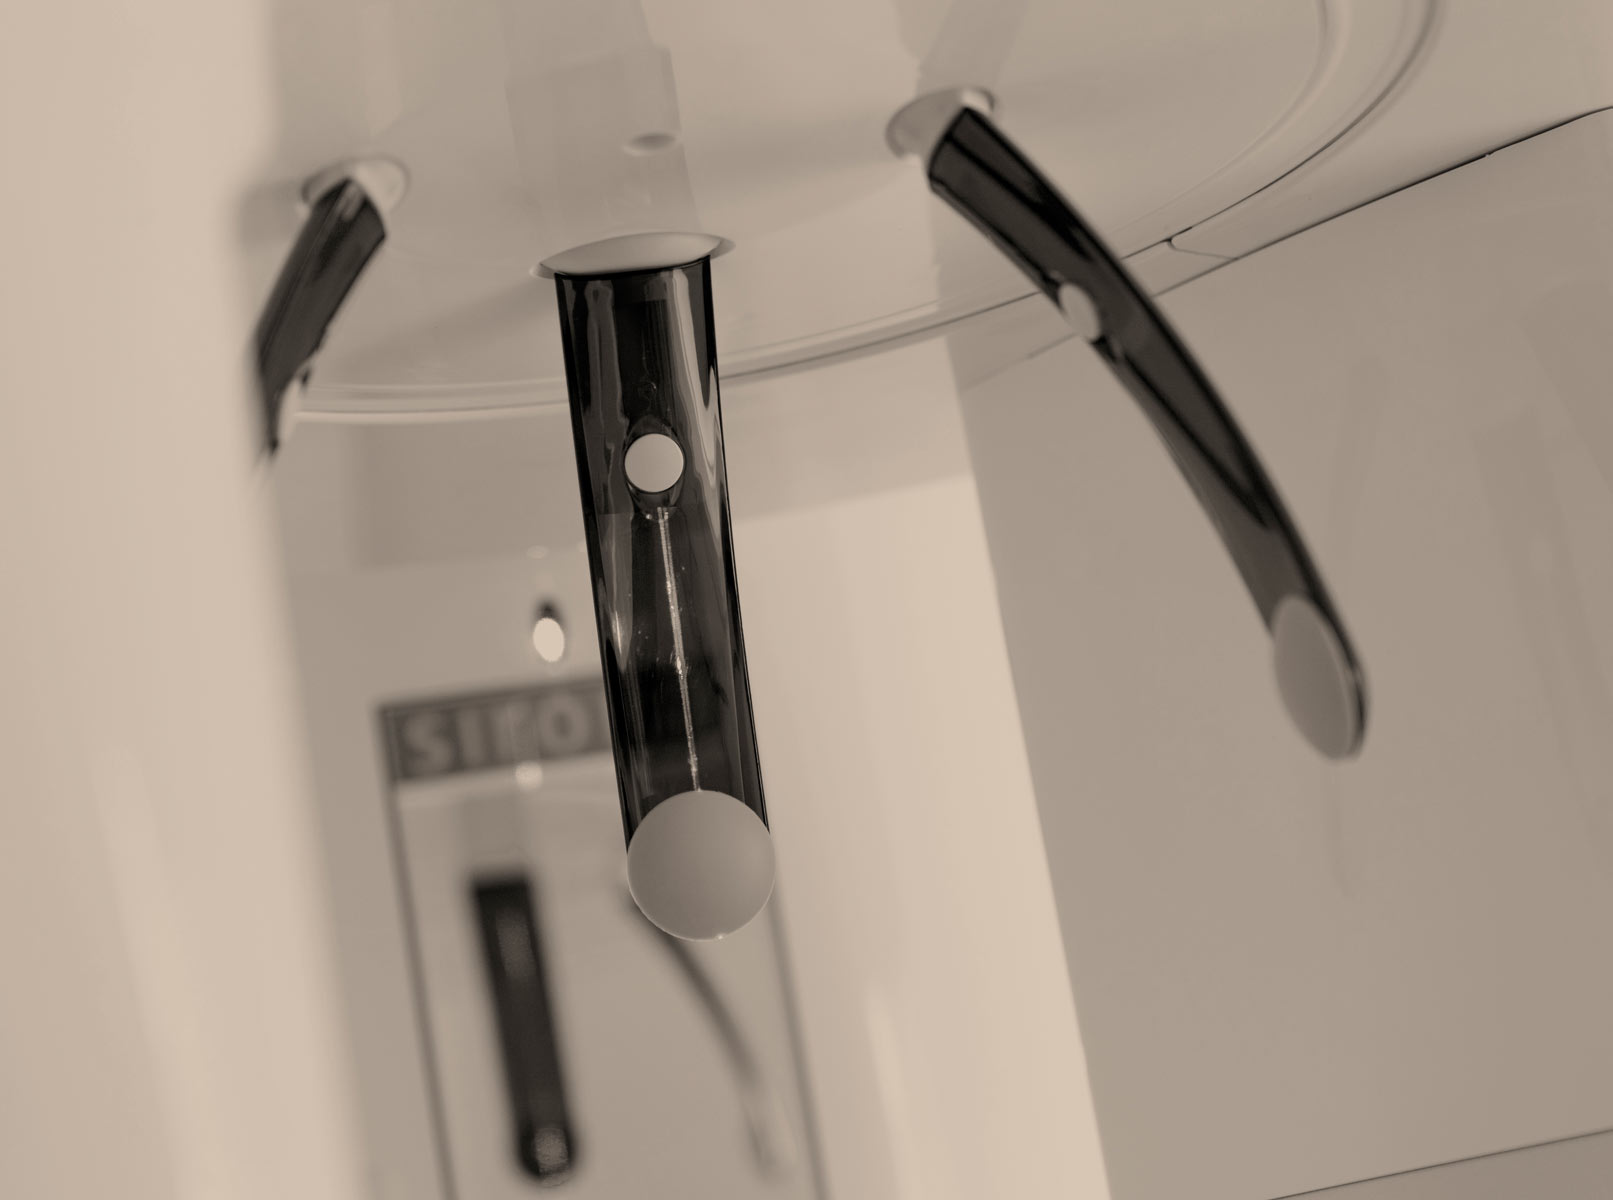 3D-Röntgen und DVT Diagnostik werden bei MKG Heugel in Moers angeboten.